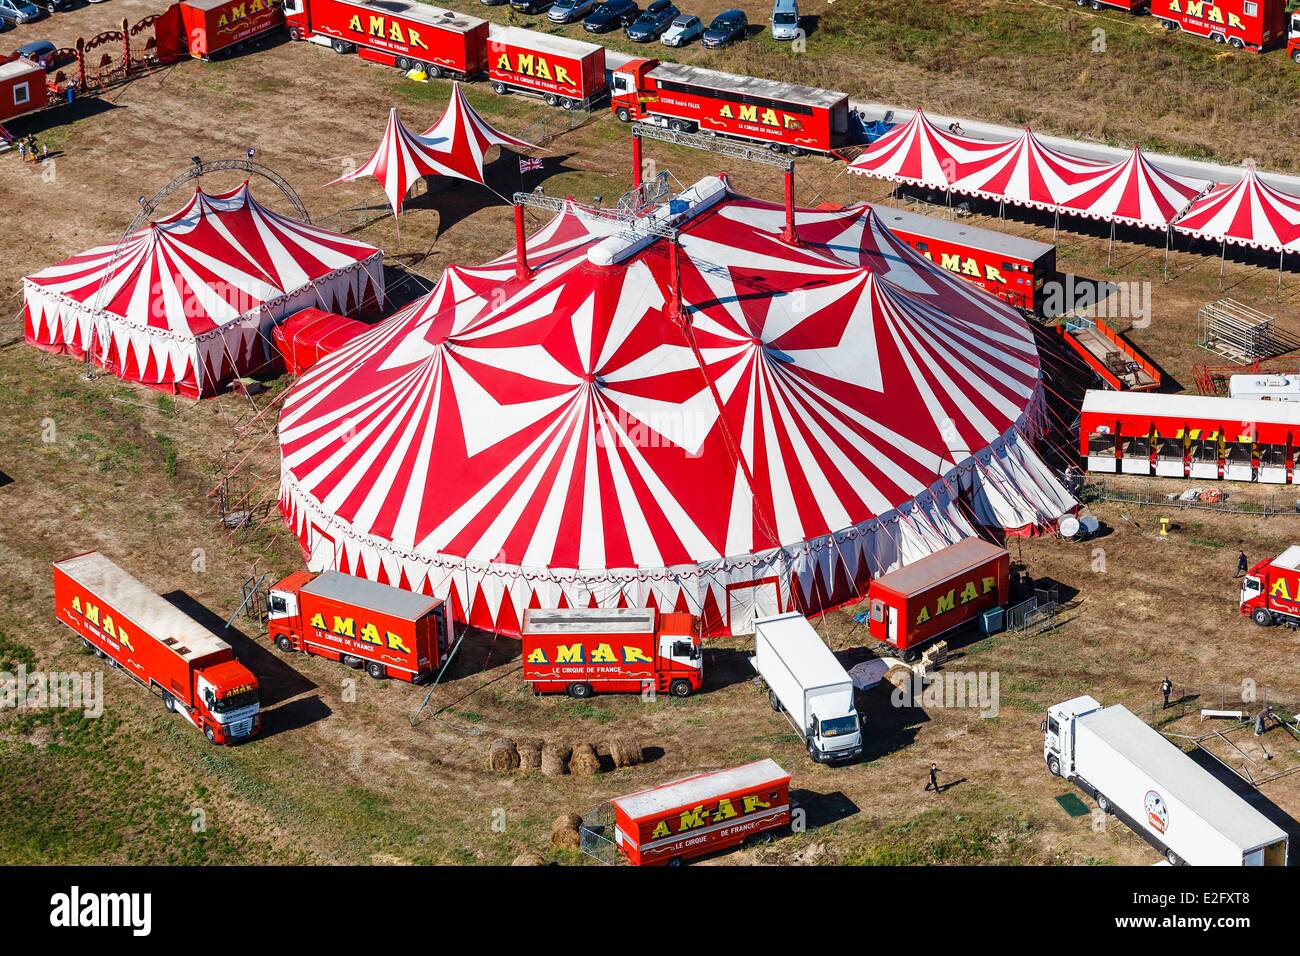 Frankreich Charente Maritime Saint Martin de Re Amar Zirkus (Luftbild) Stockfoto